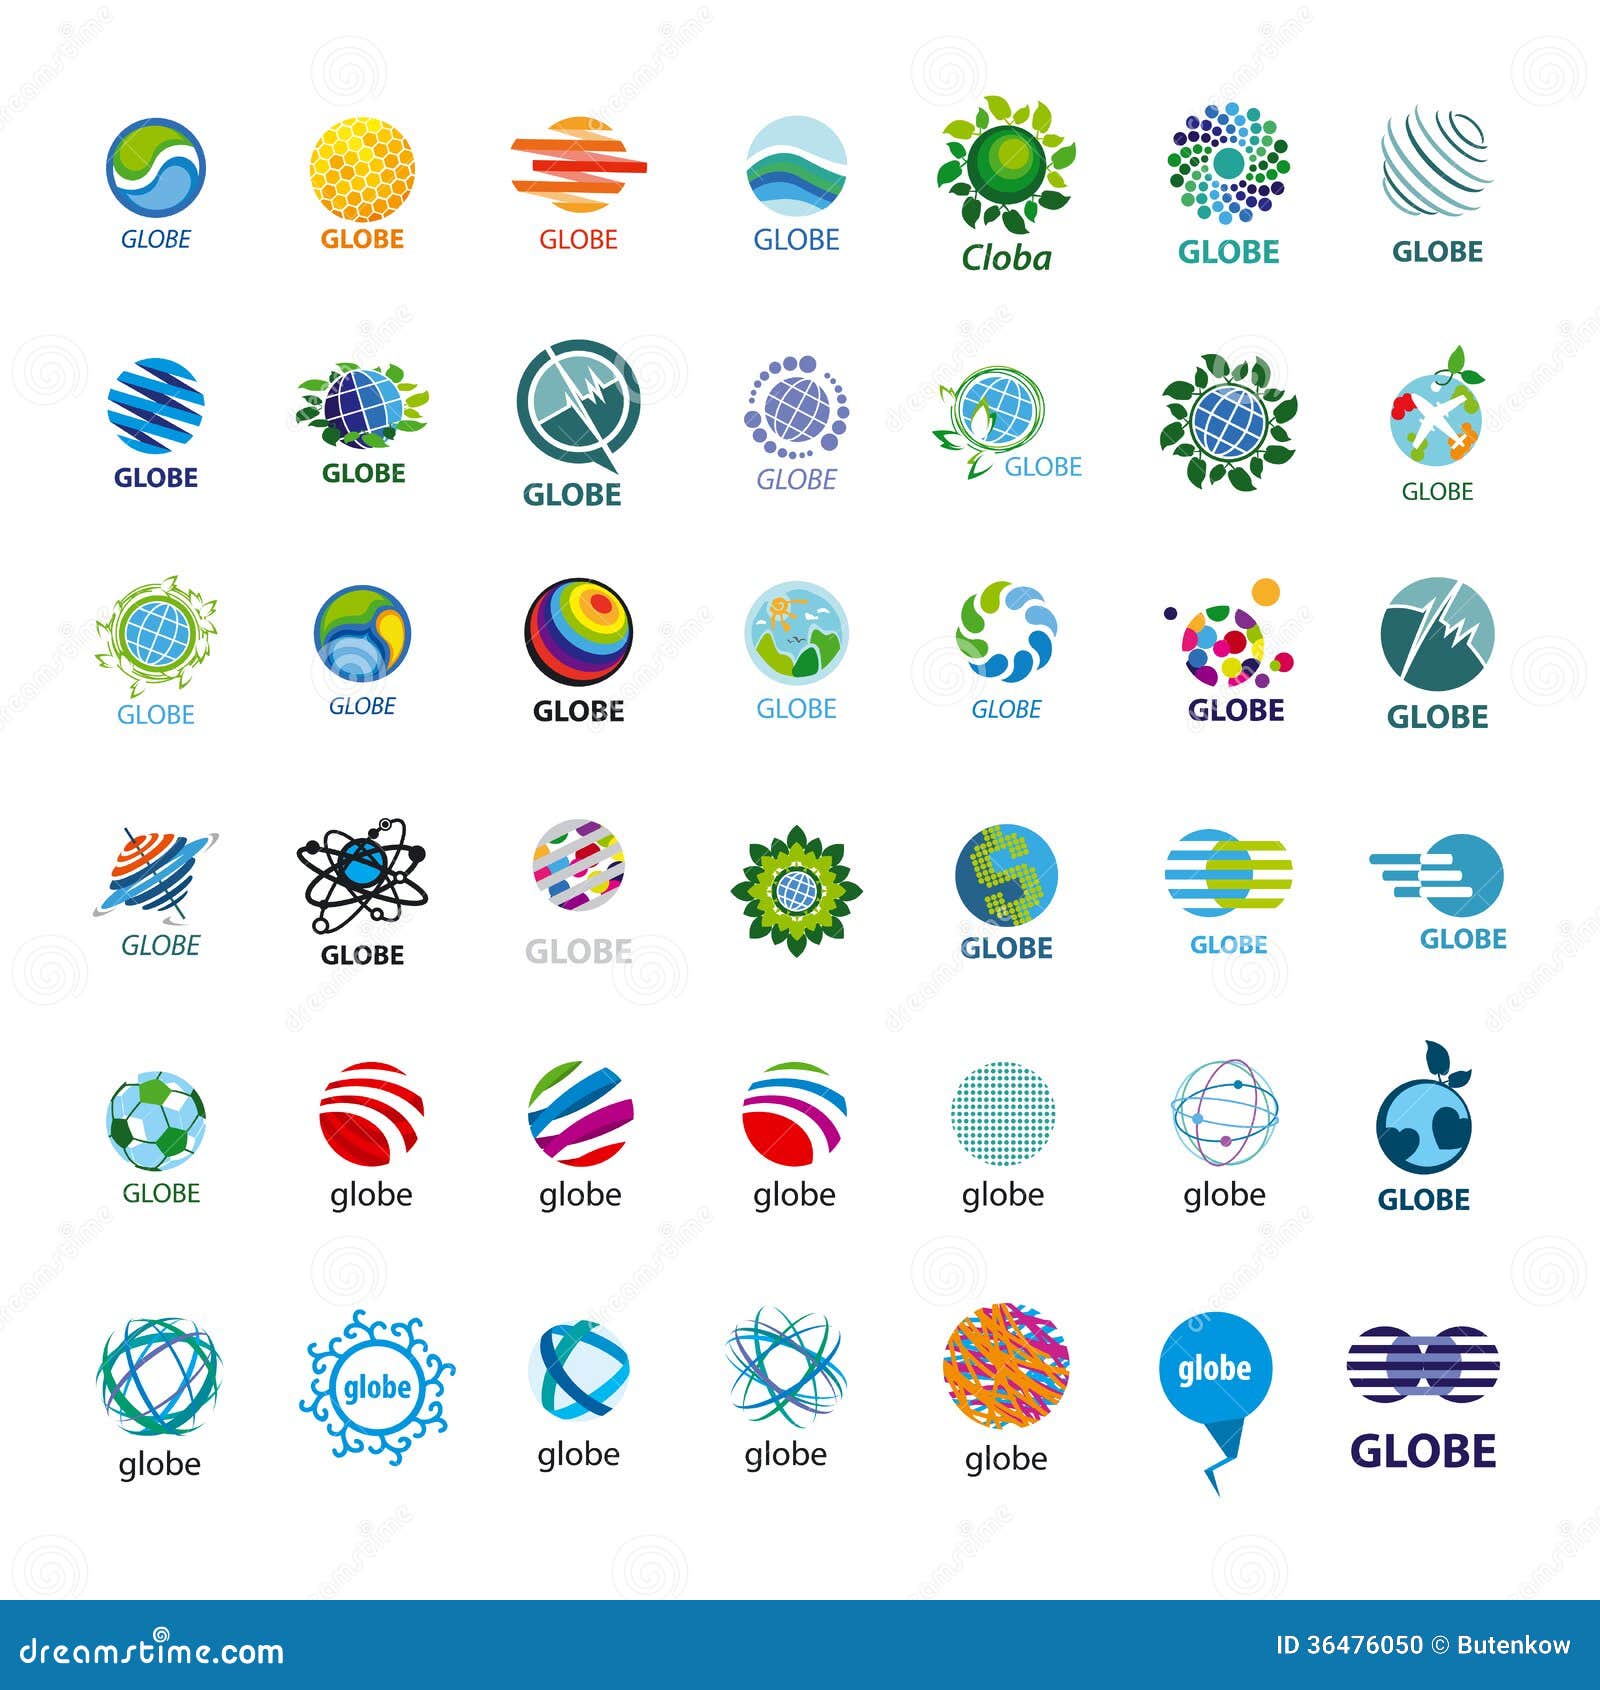 Globe Internet Logo Design Template | PosterMyWall